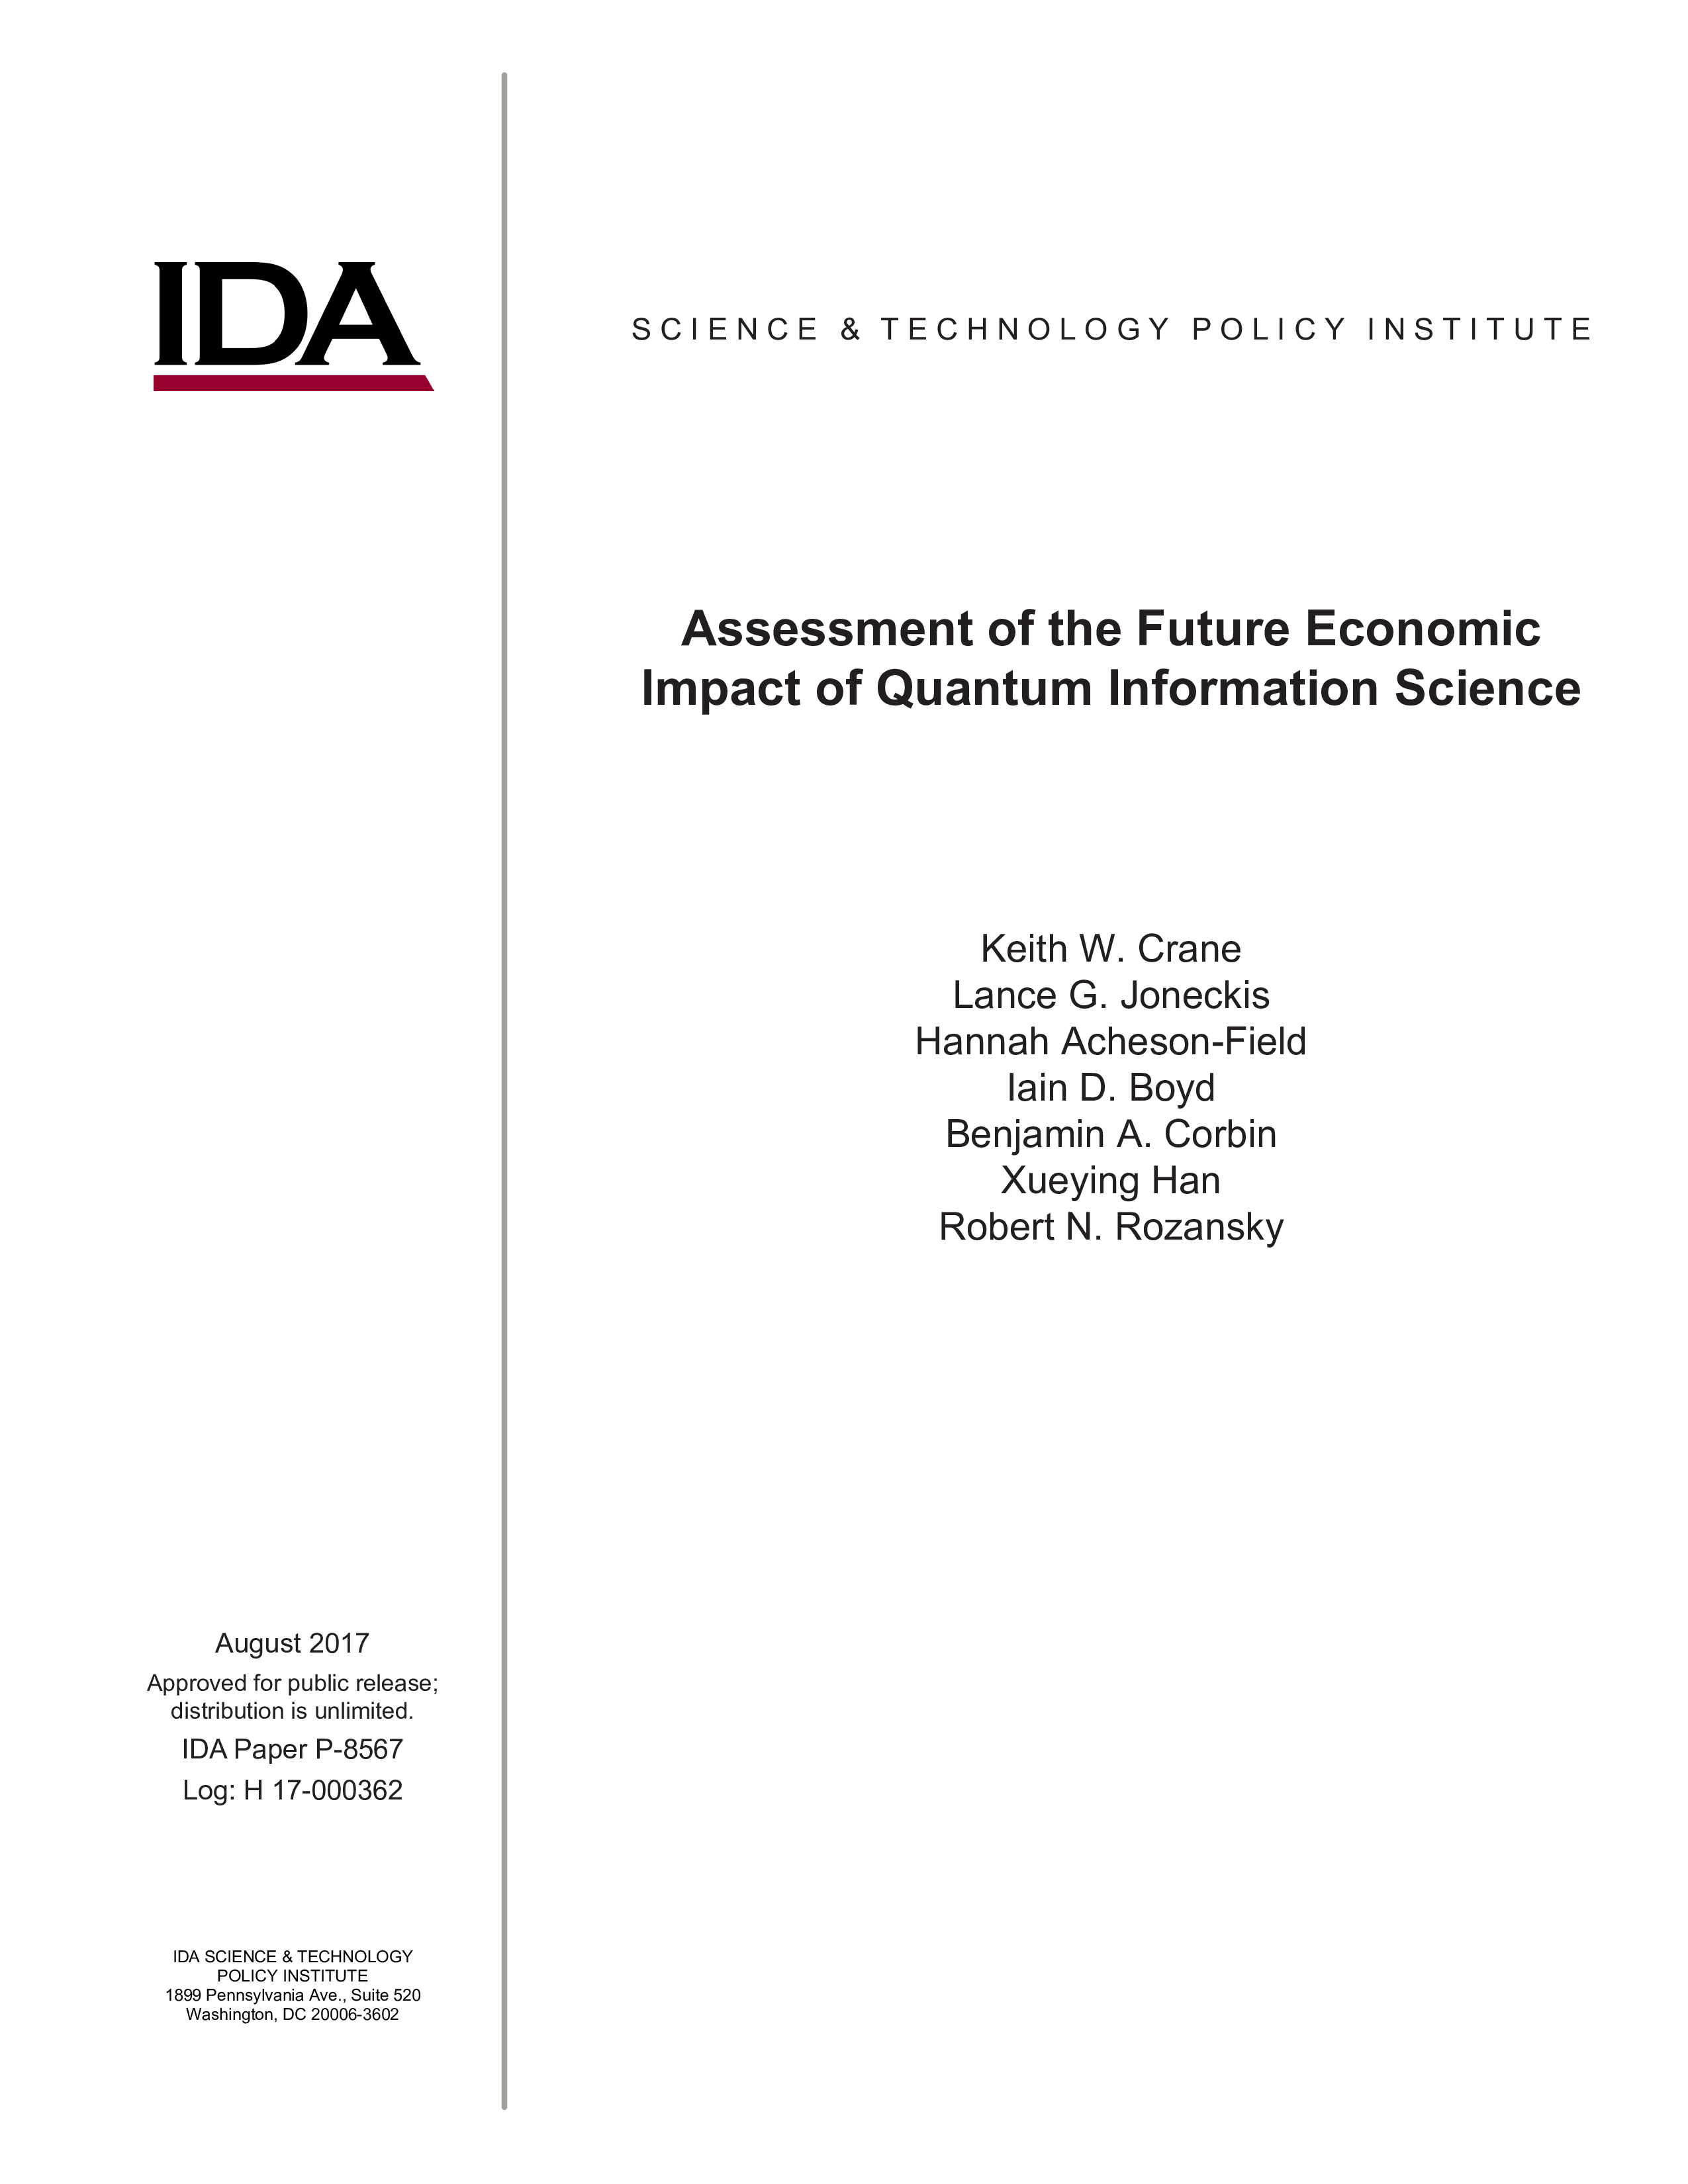 Assessment of the Future Economic Impact of Quantum Information Science